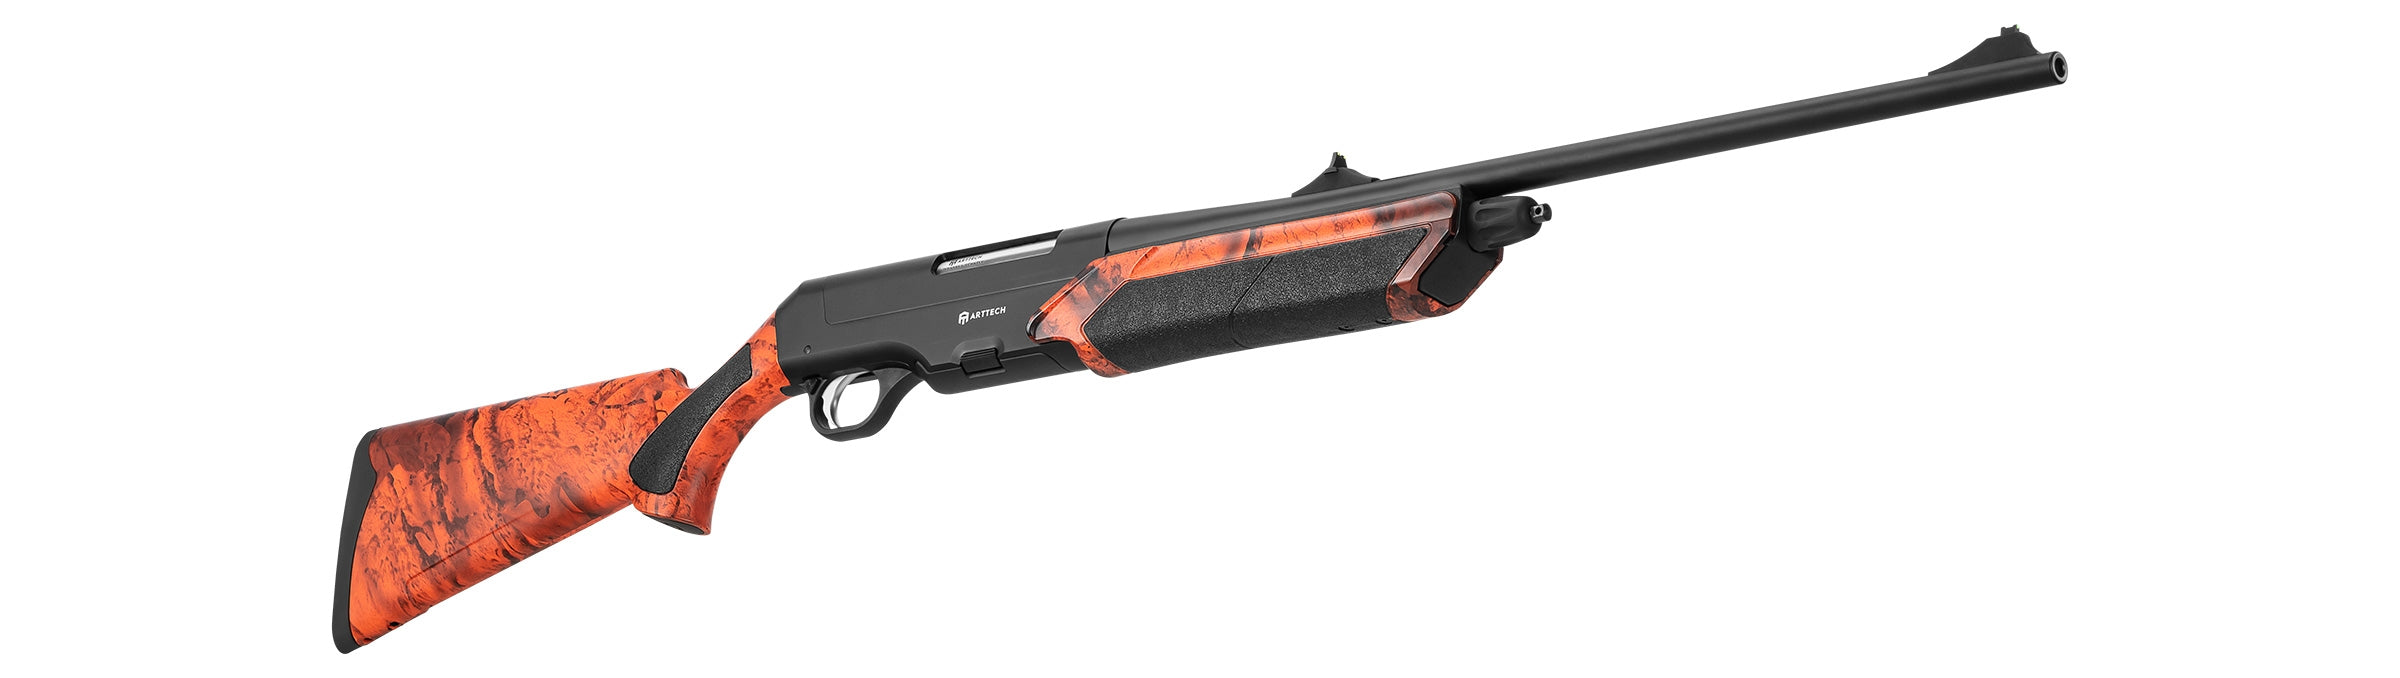 Prima XP Slide Hunting Rifle